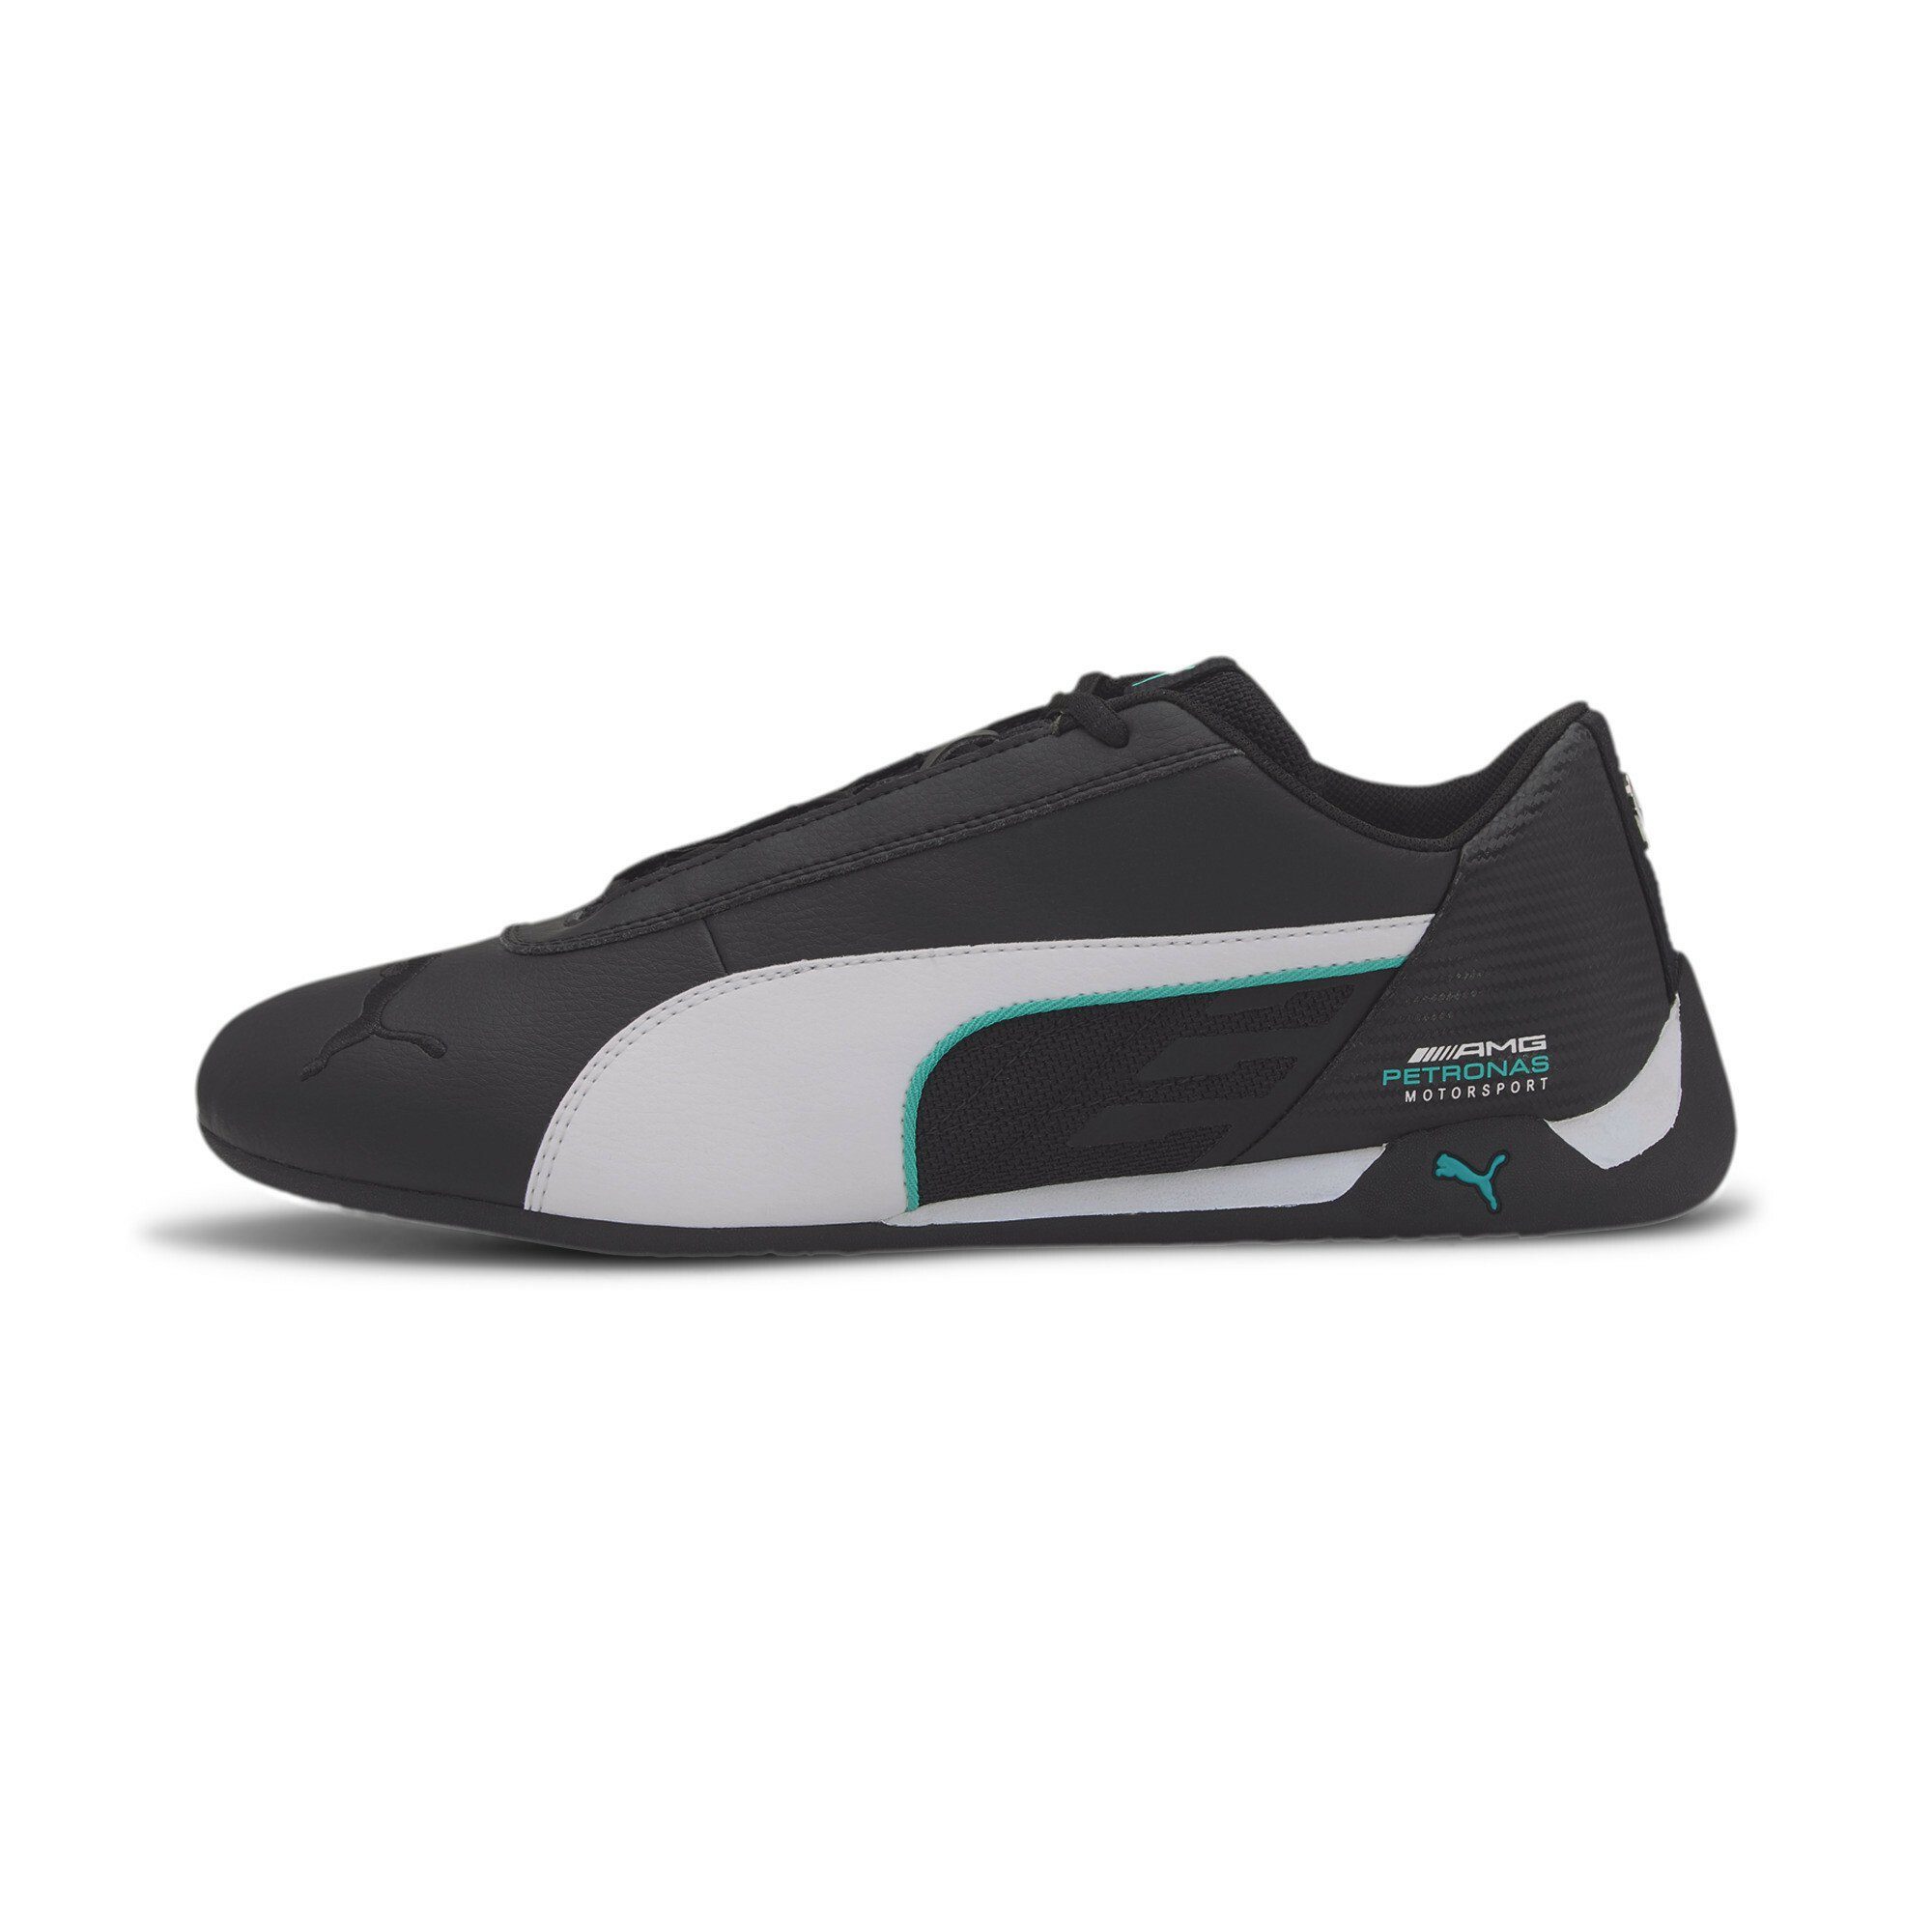 PUMA »Mercedes R-Cat Sneaker« Sneaker, Bootie-Konstruktion online kaufen |  OTTO